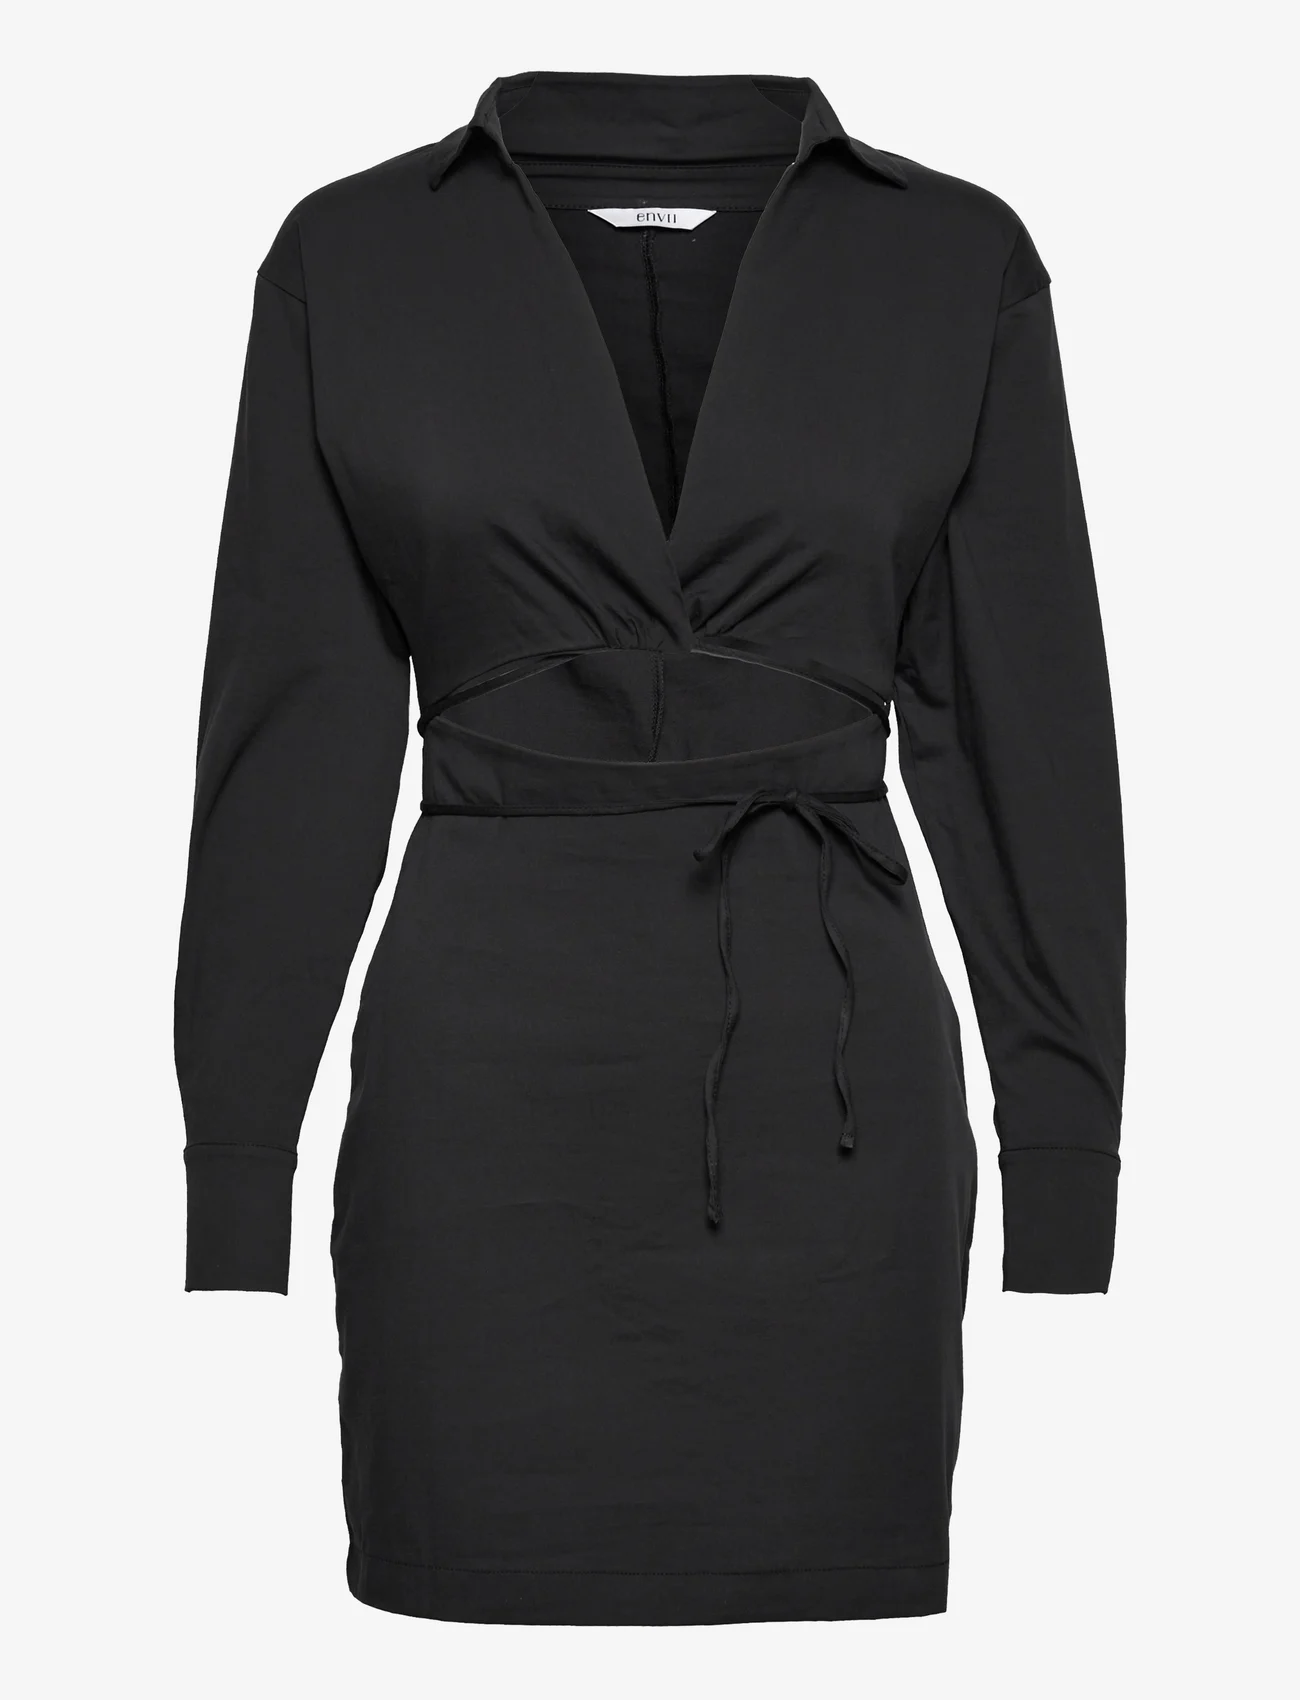 Envii - ENTAMMY LS DRESS 6893 - feestelijke kleding voor outlet-prijzen - black - 0